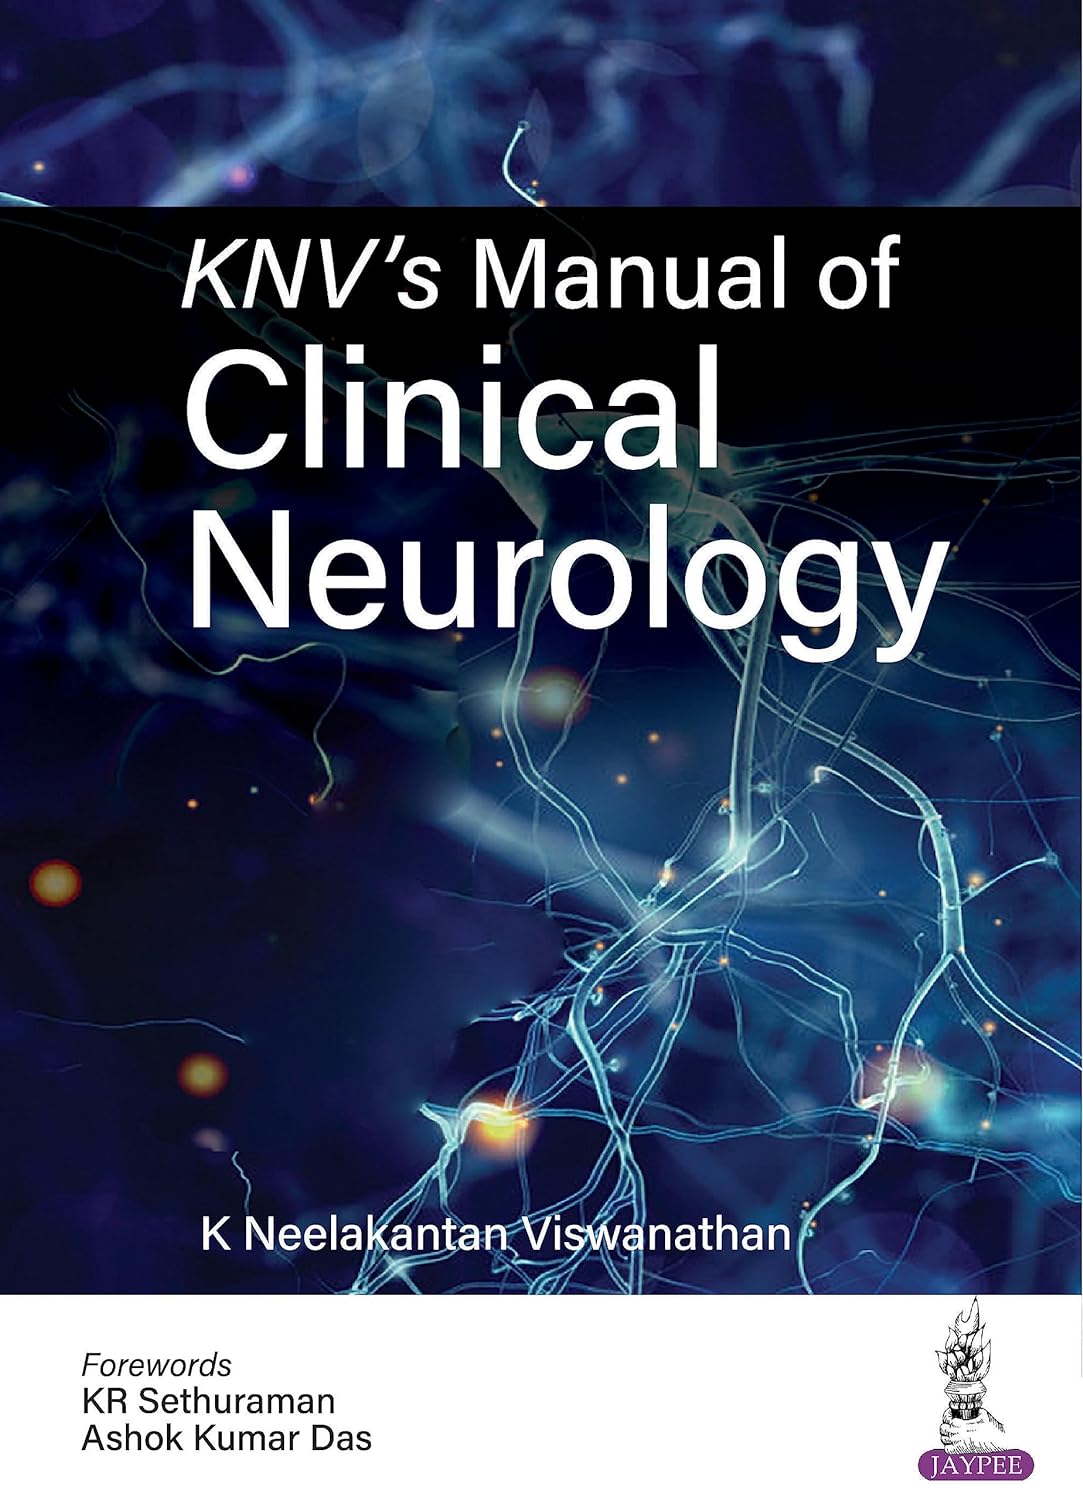 KNV s Manual of Clinical Neurology  by K Neelakantan Viswanathan 